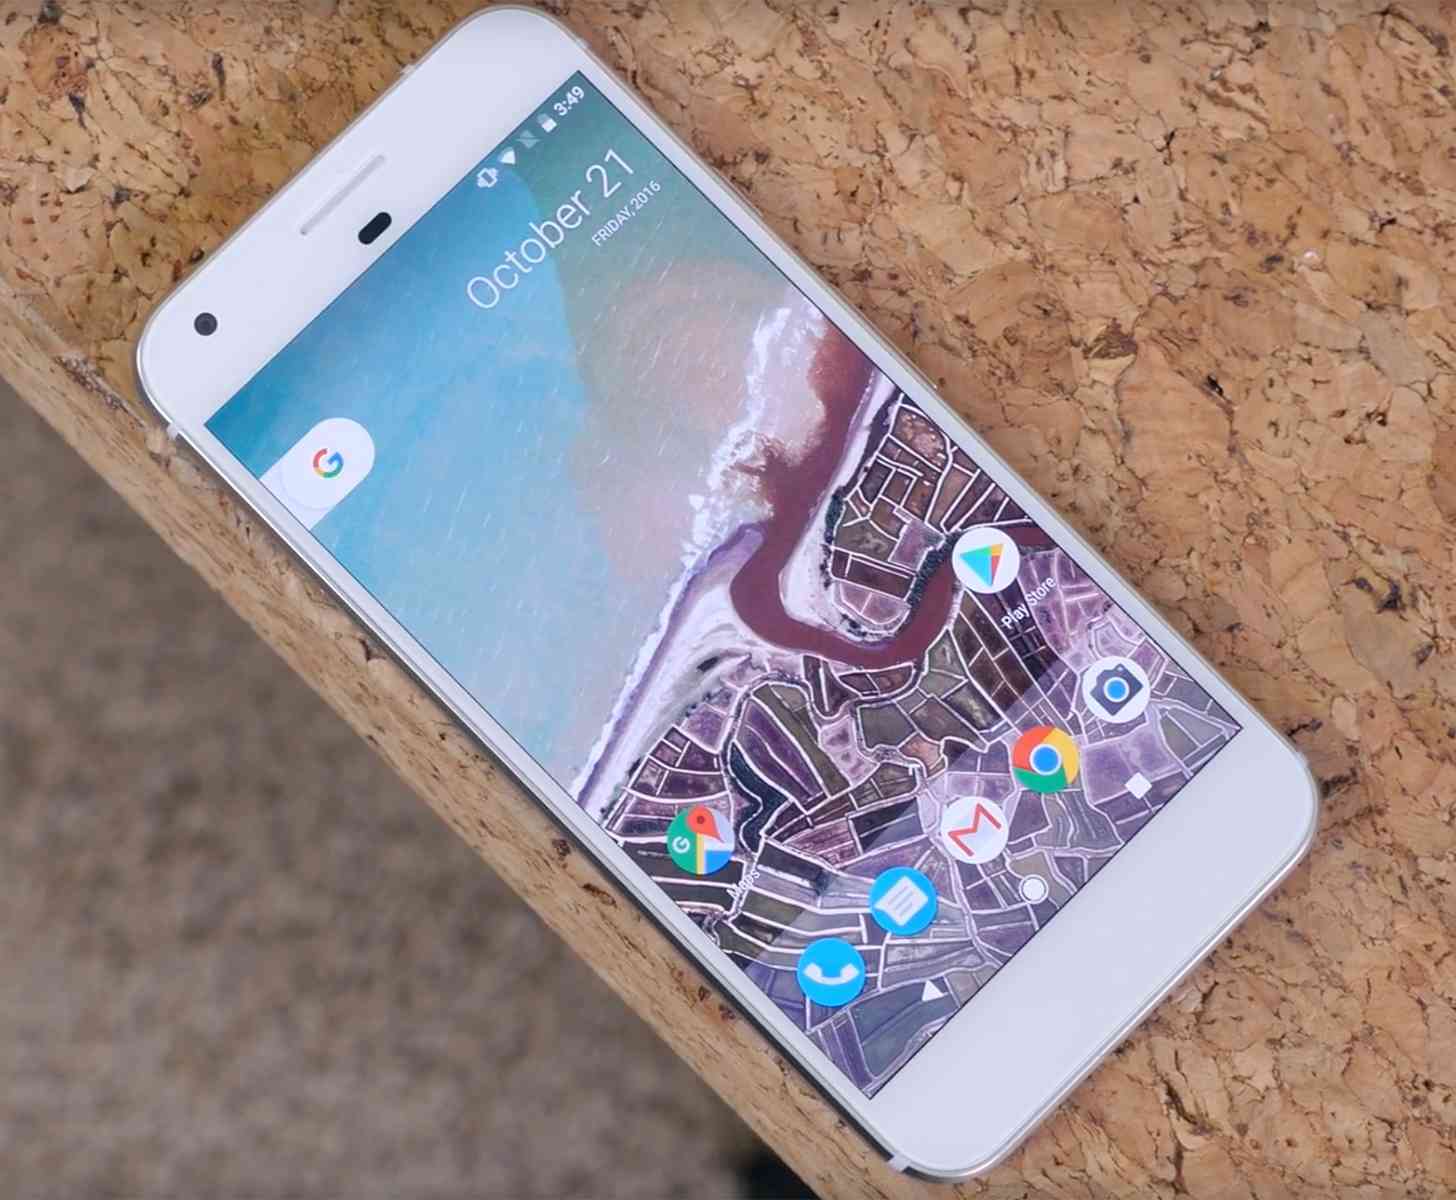 Google Pixel XL hands-on video